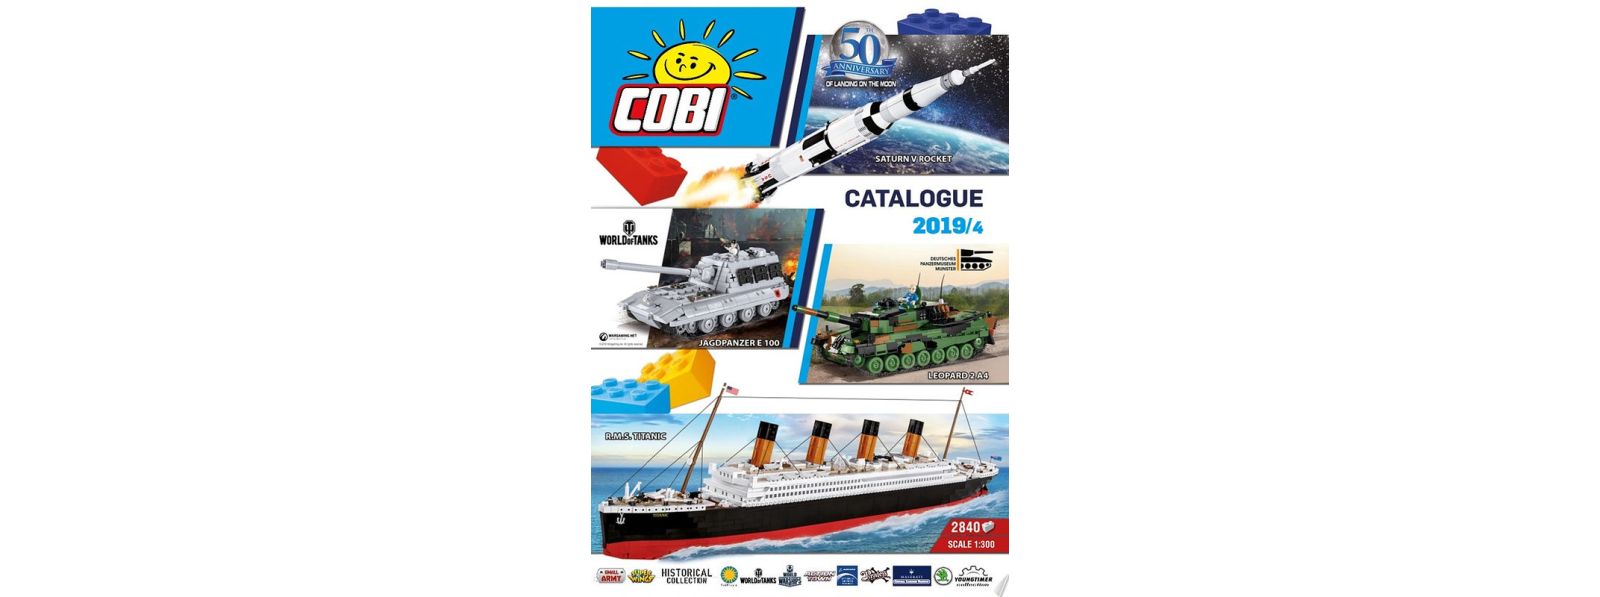 New catalogue of Cobi blocks 2019/4